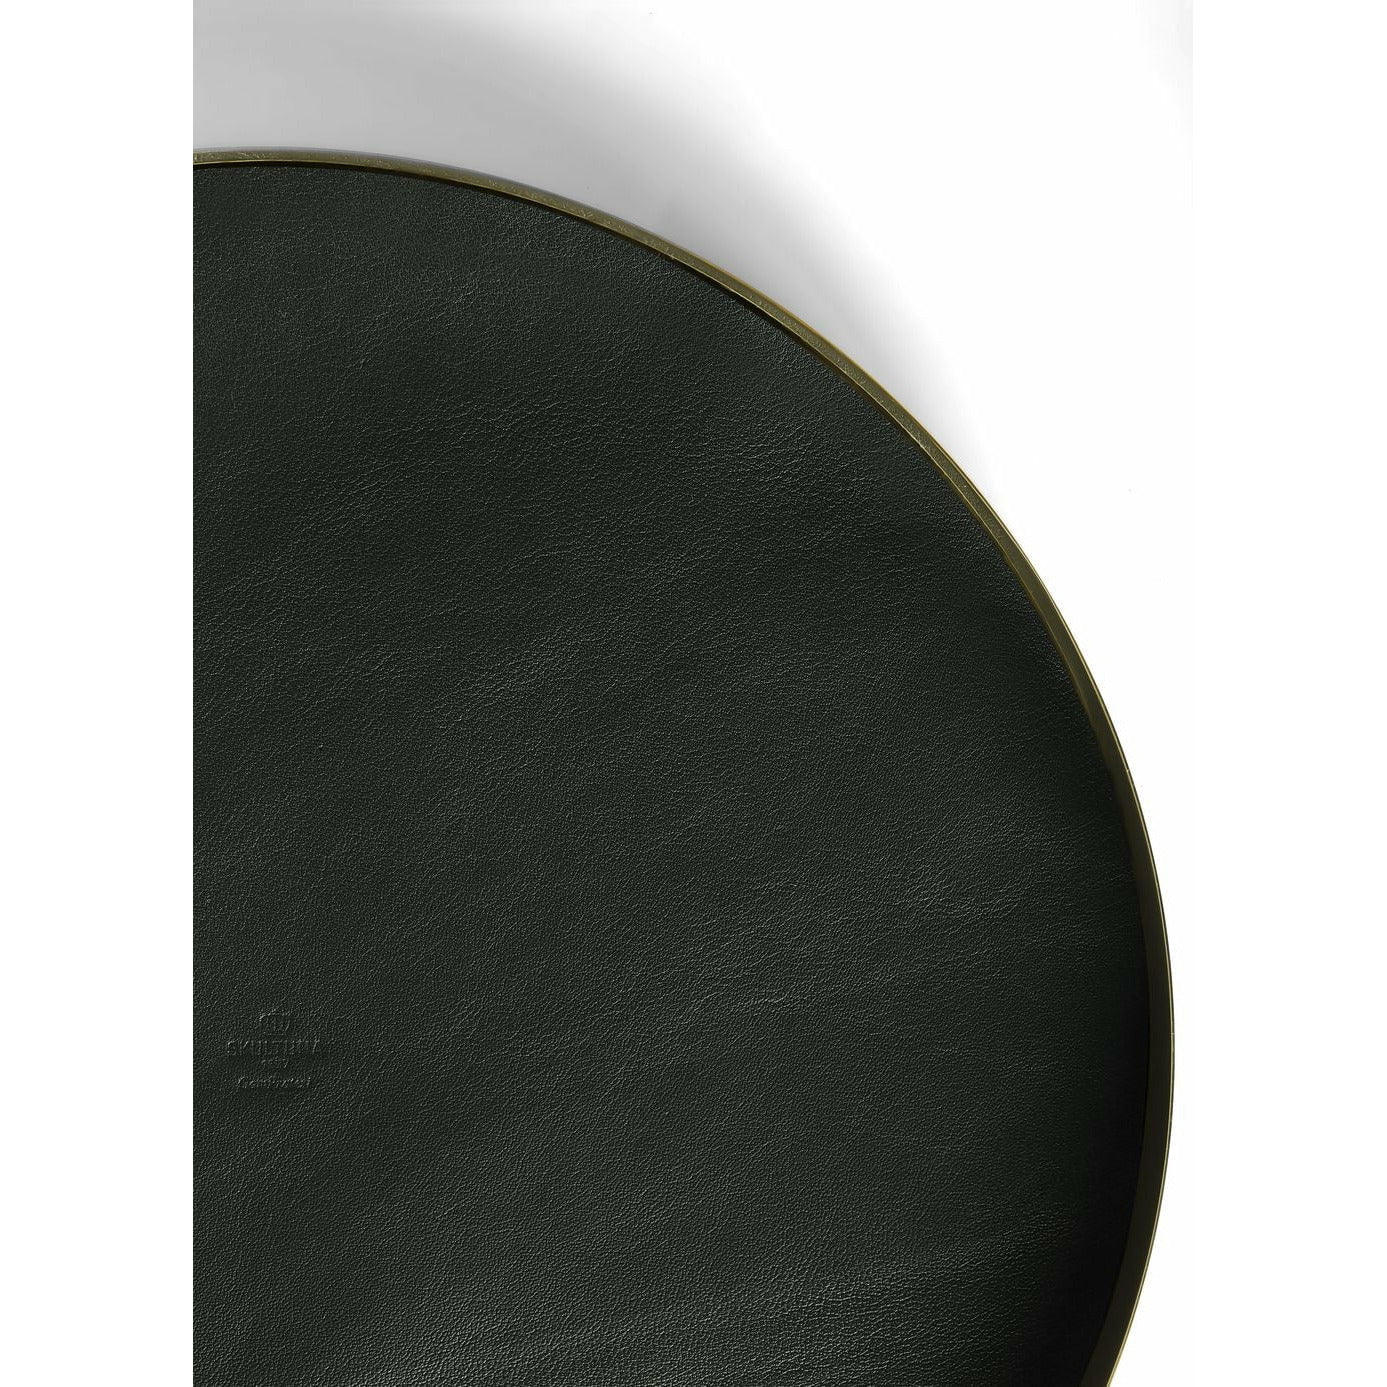 Skultuna Karui vassoio Ø34 cm, verde scuro